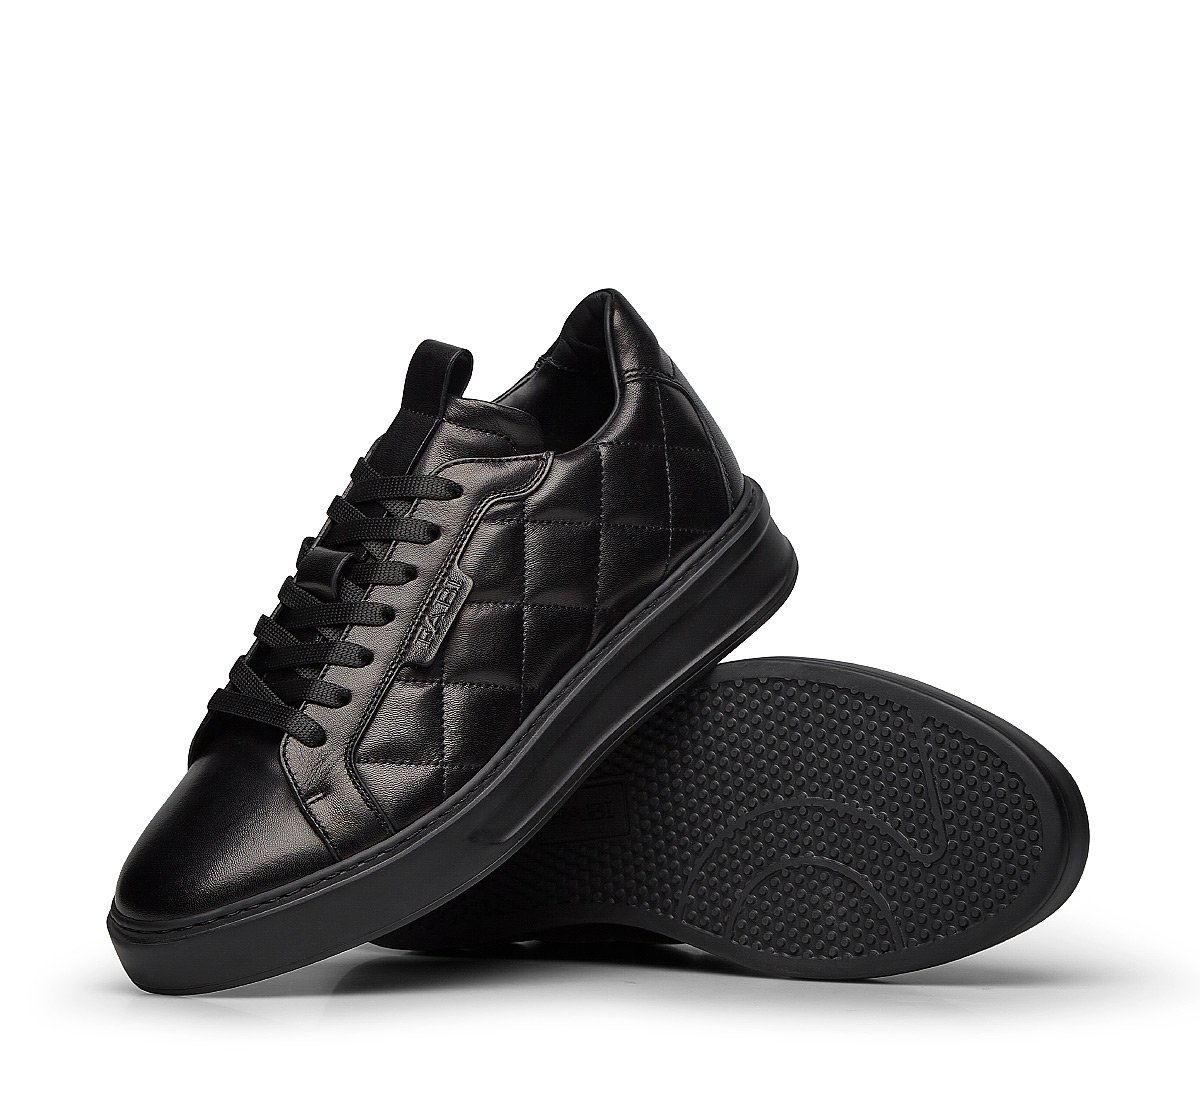 Sneaker in nappa leather